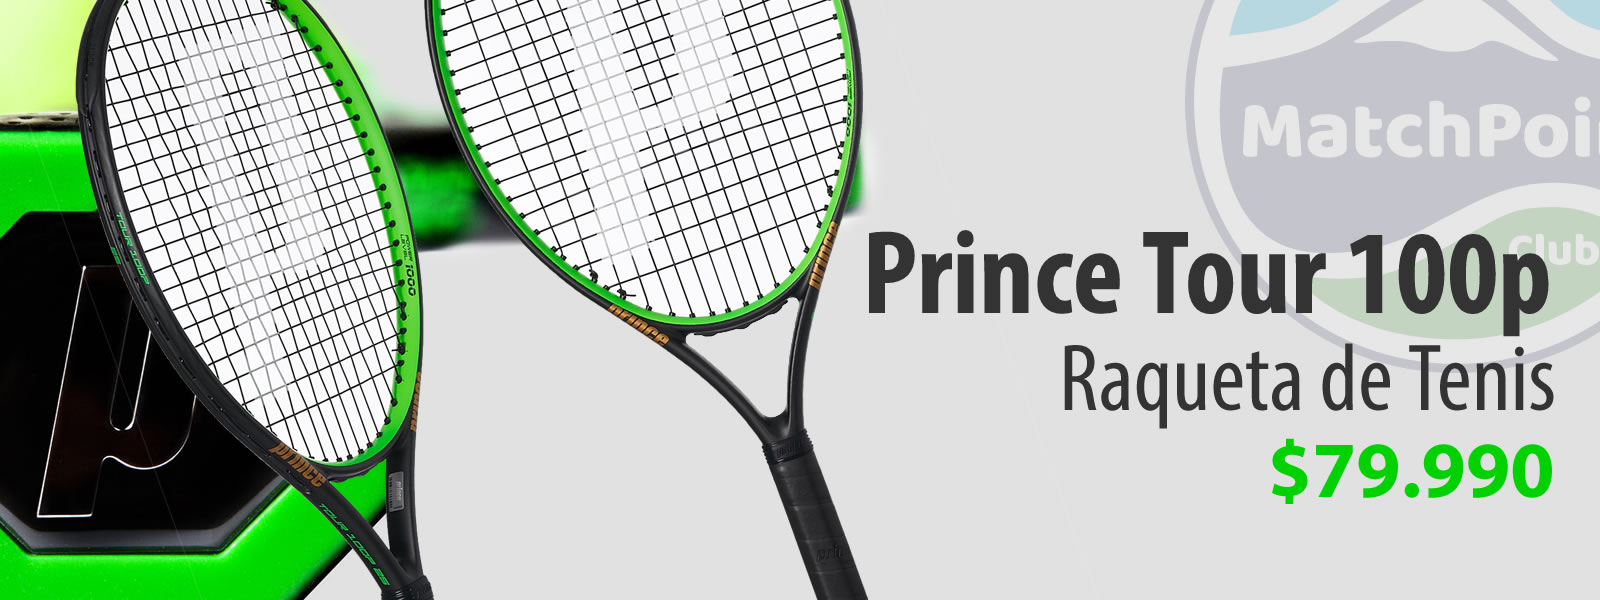 matchpoint-tenis-puerto-varas-prince-tour-100p